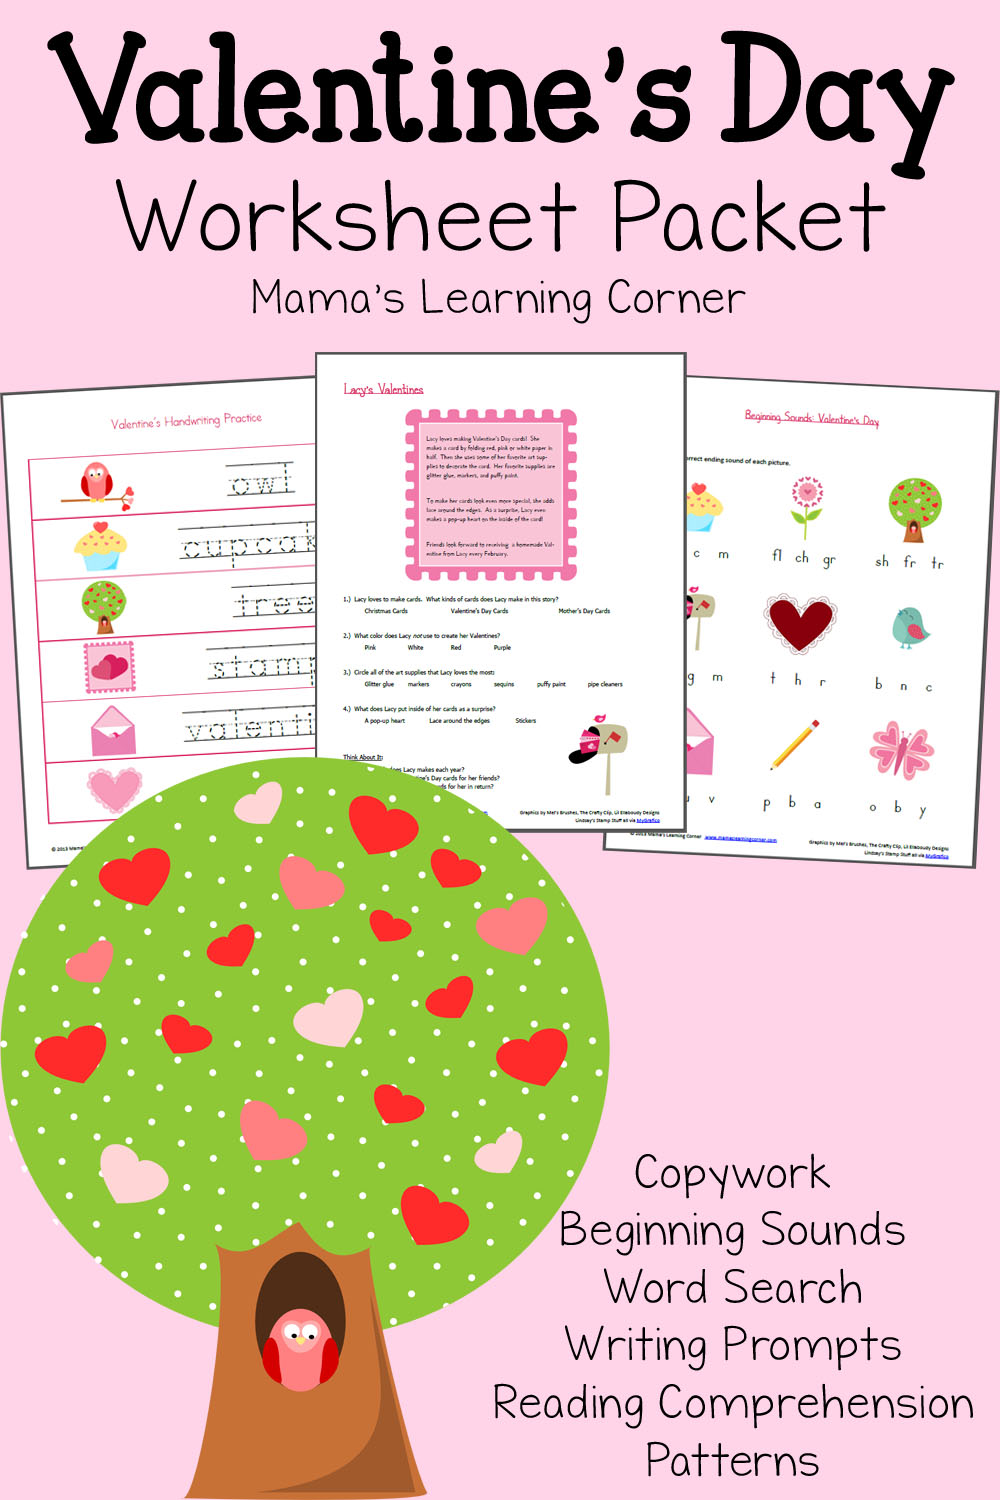 Valentine's Day Worksheet Packet - Mamas Learning Corner